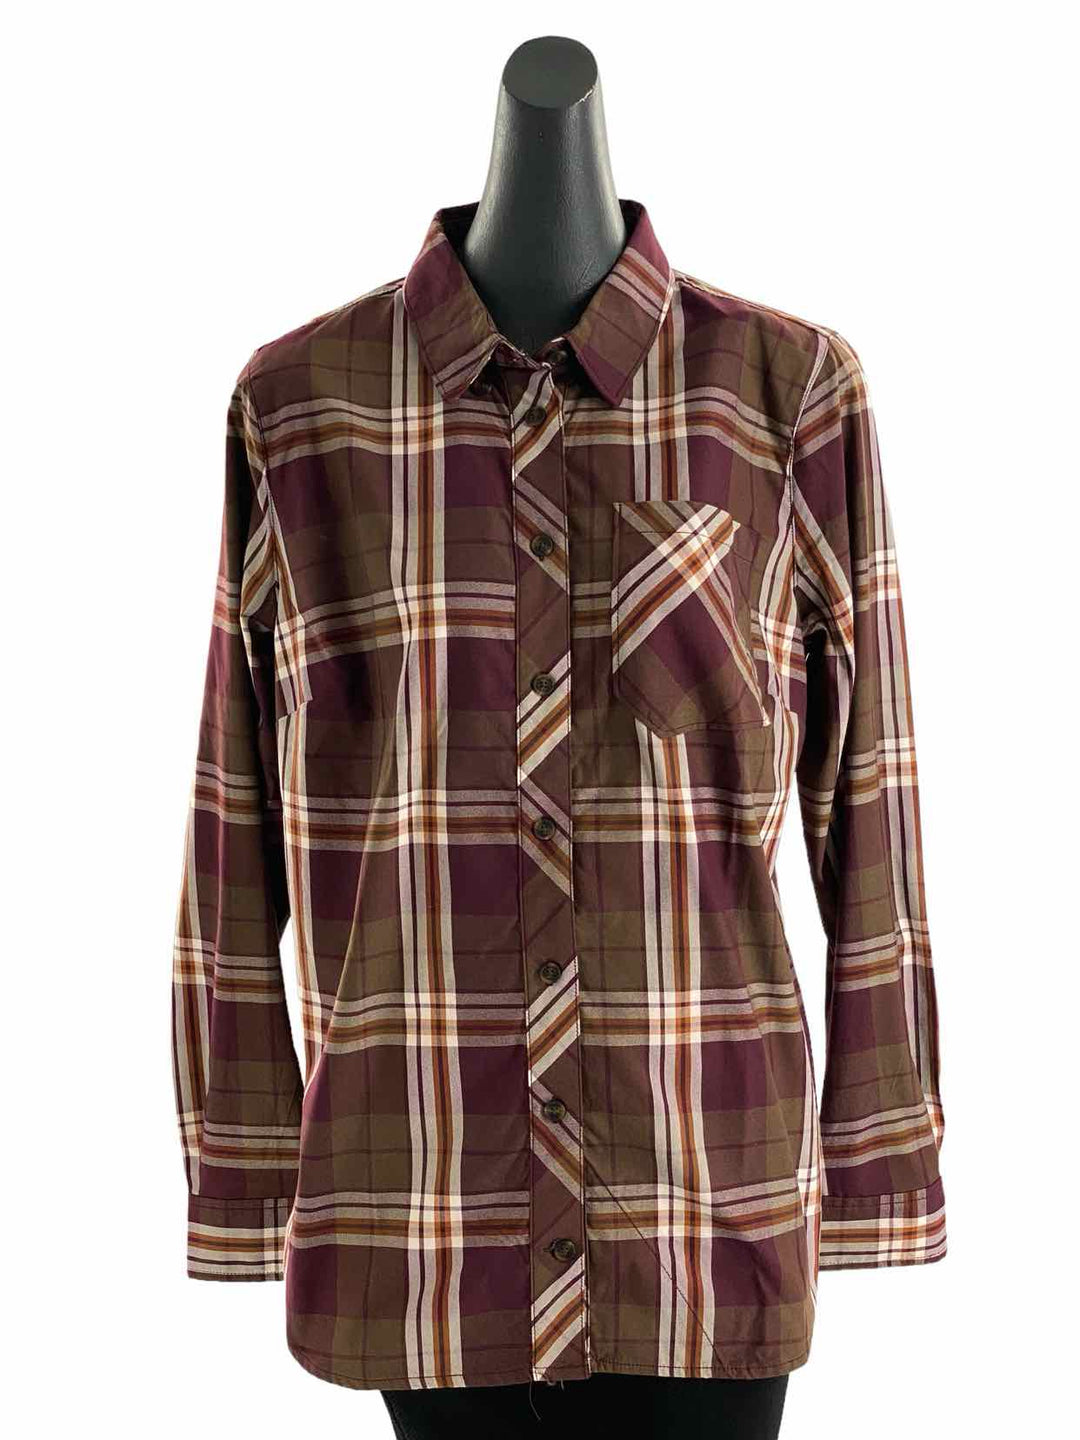 Duluth Trading Size M Purple Brown Plaid NWT Long Sleeve Shirts